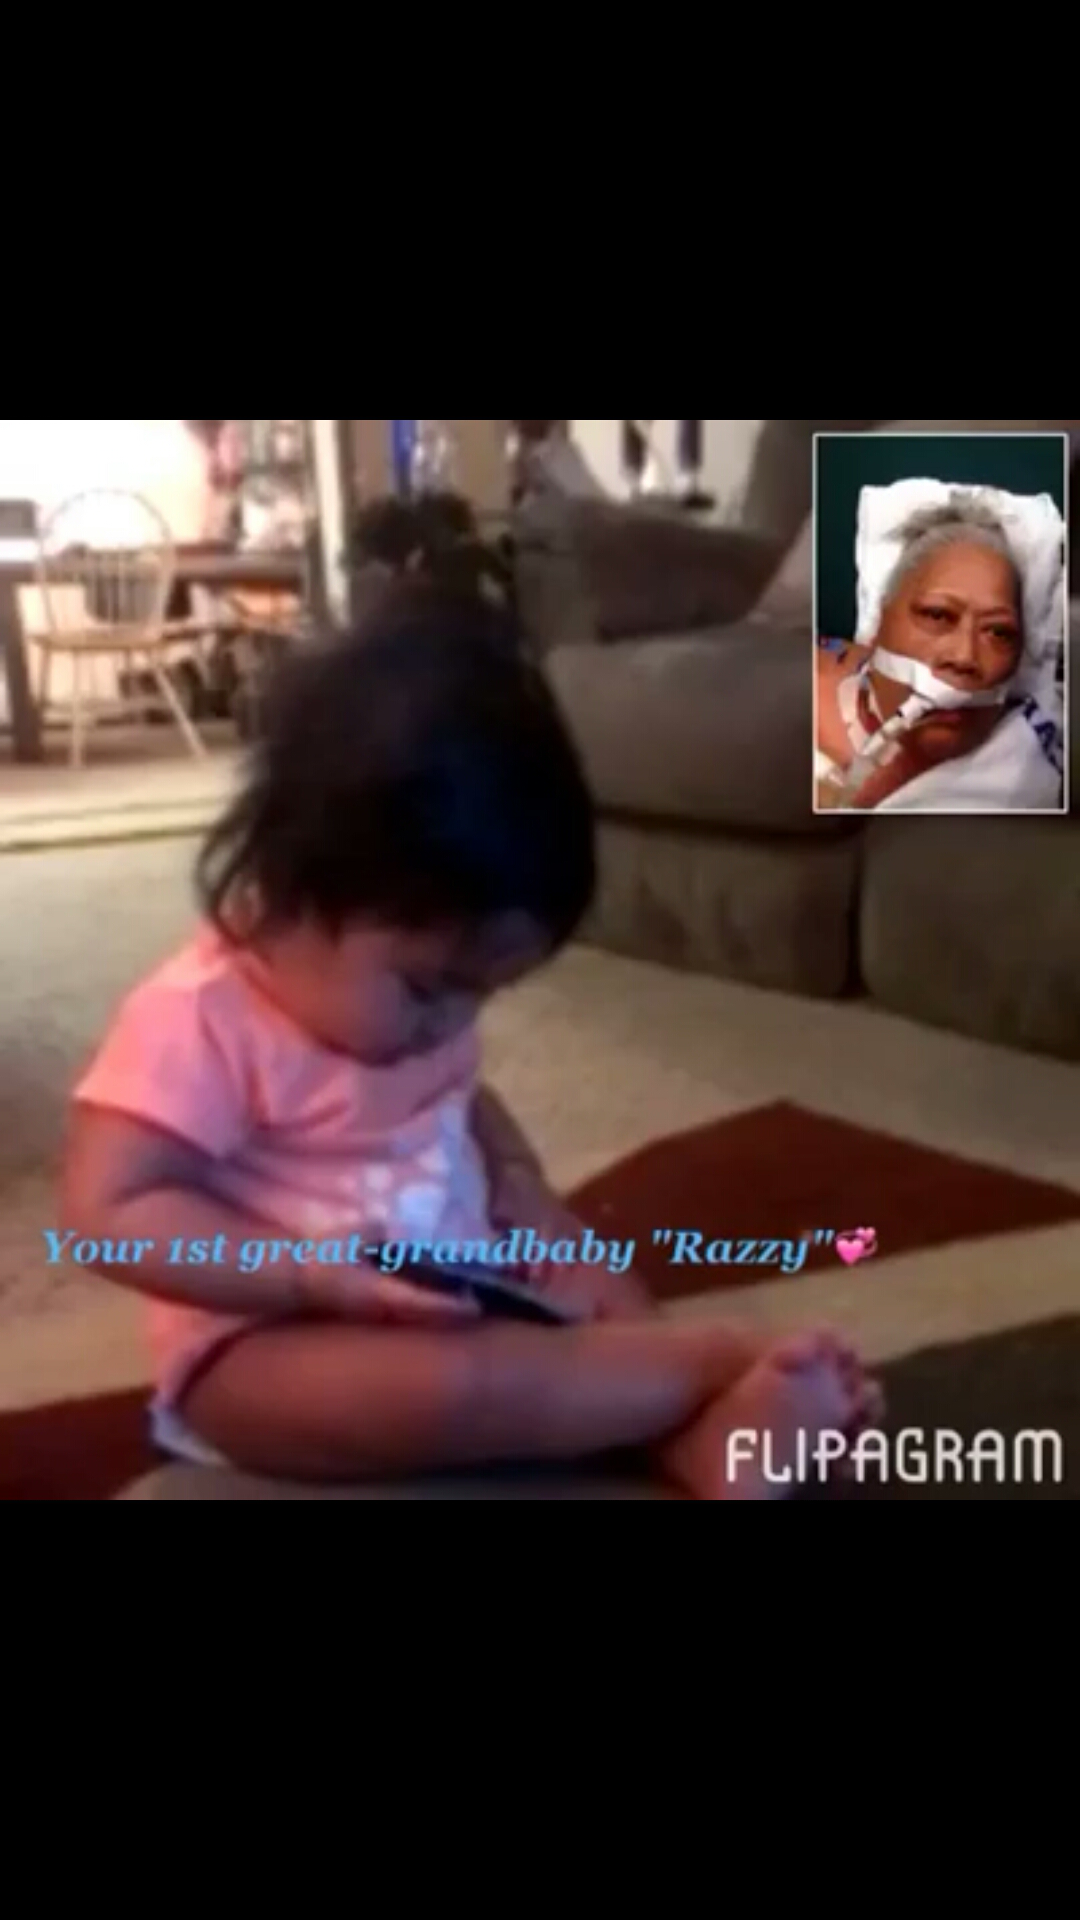 Her First Great-Grandbaby Razzy Silva